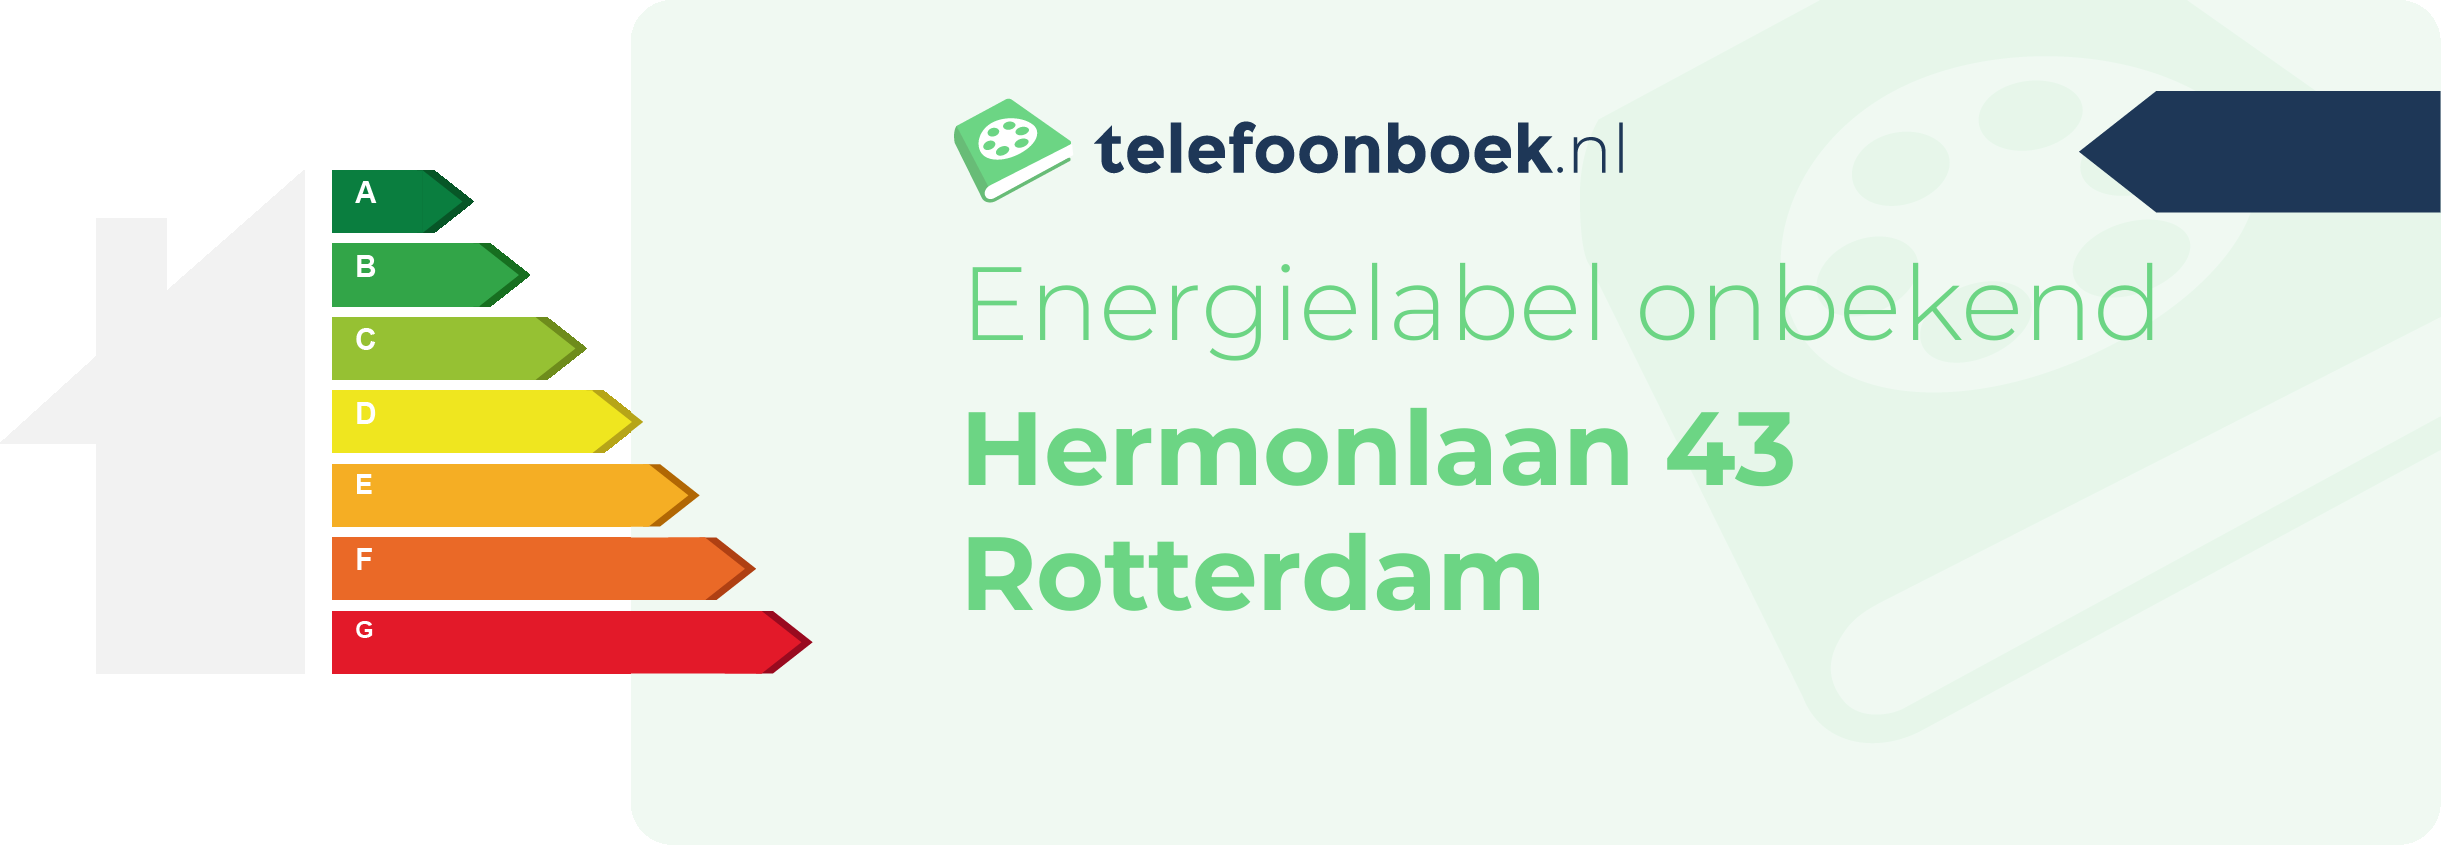 Energielabel Hermonlaan 43 Rotterdam